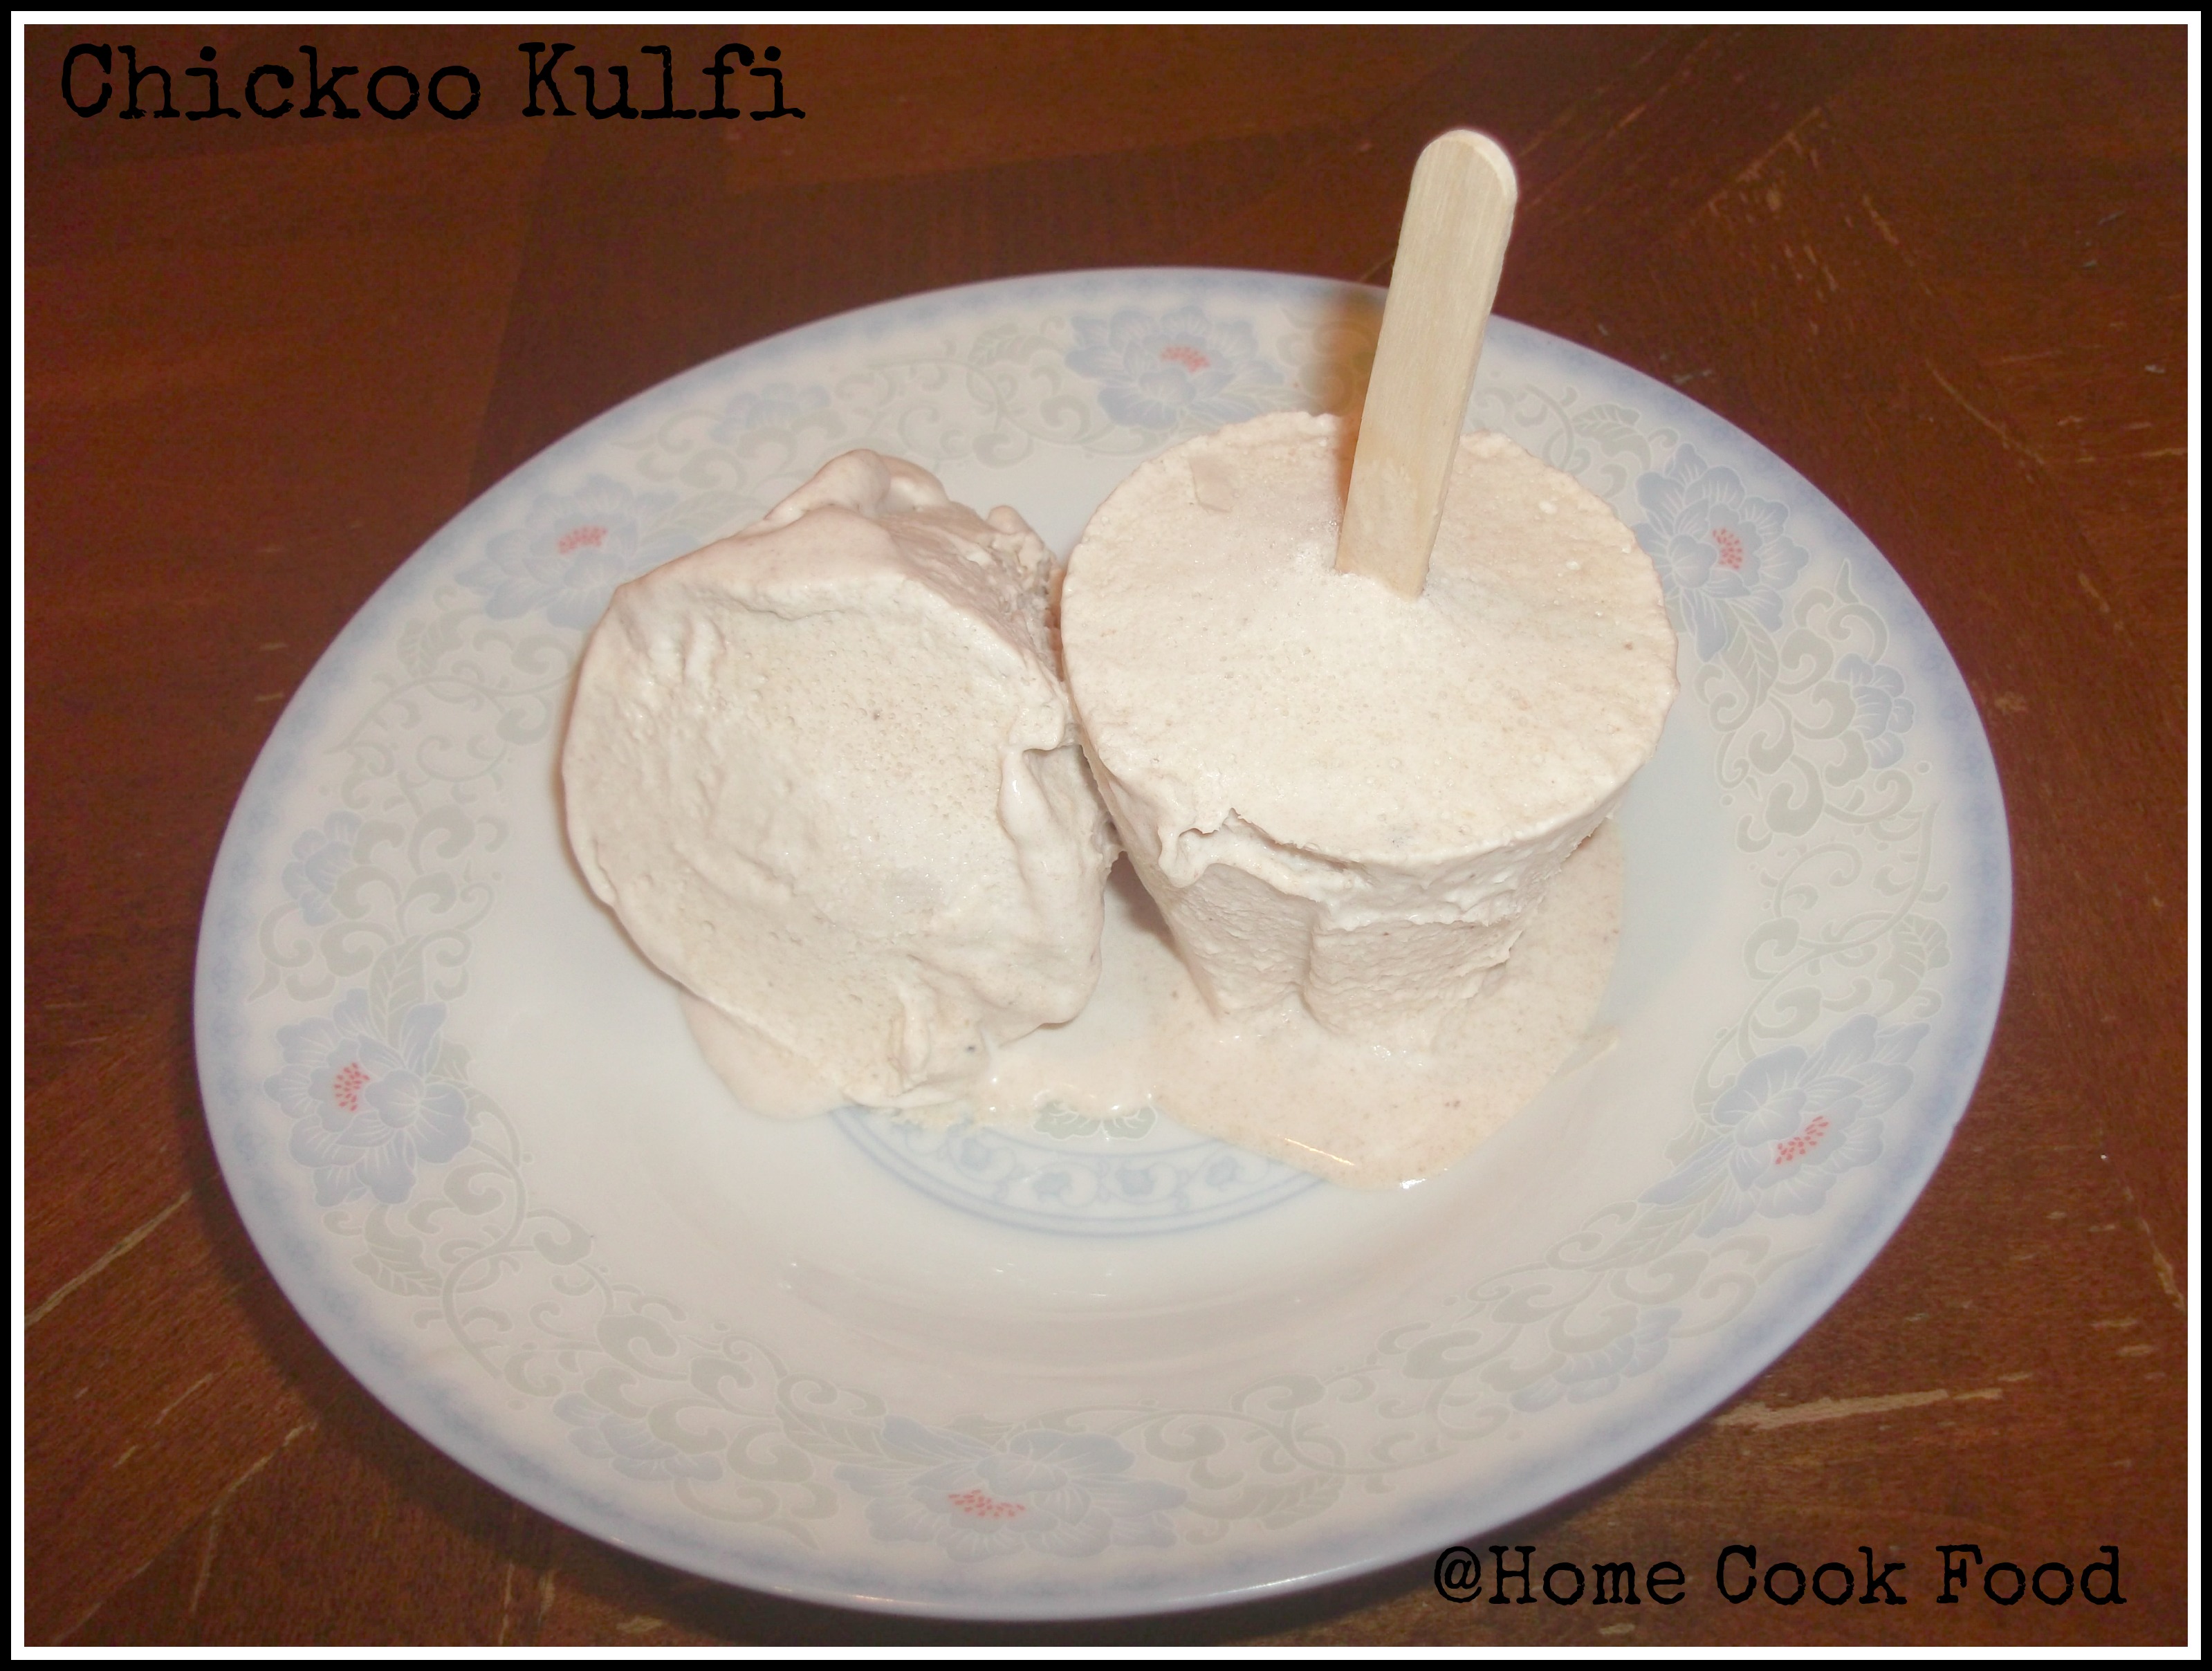 Chickoo Kulfi - Sapota Indian Ice Cream